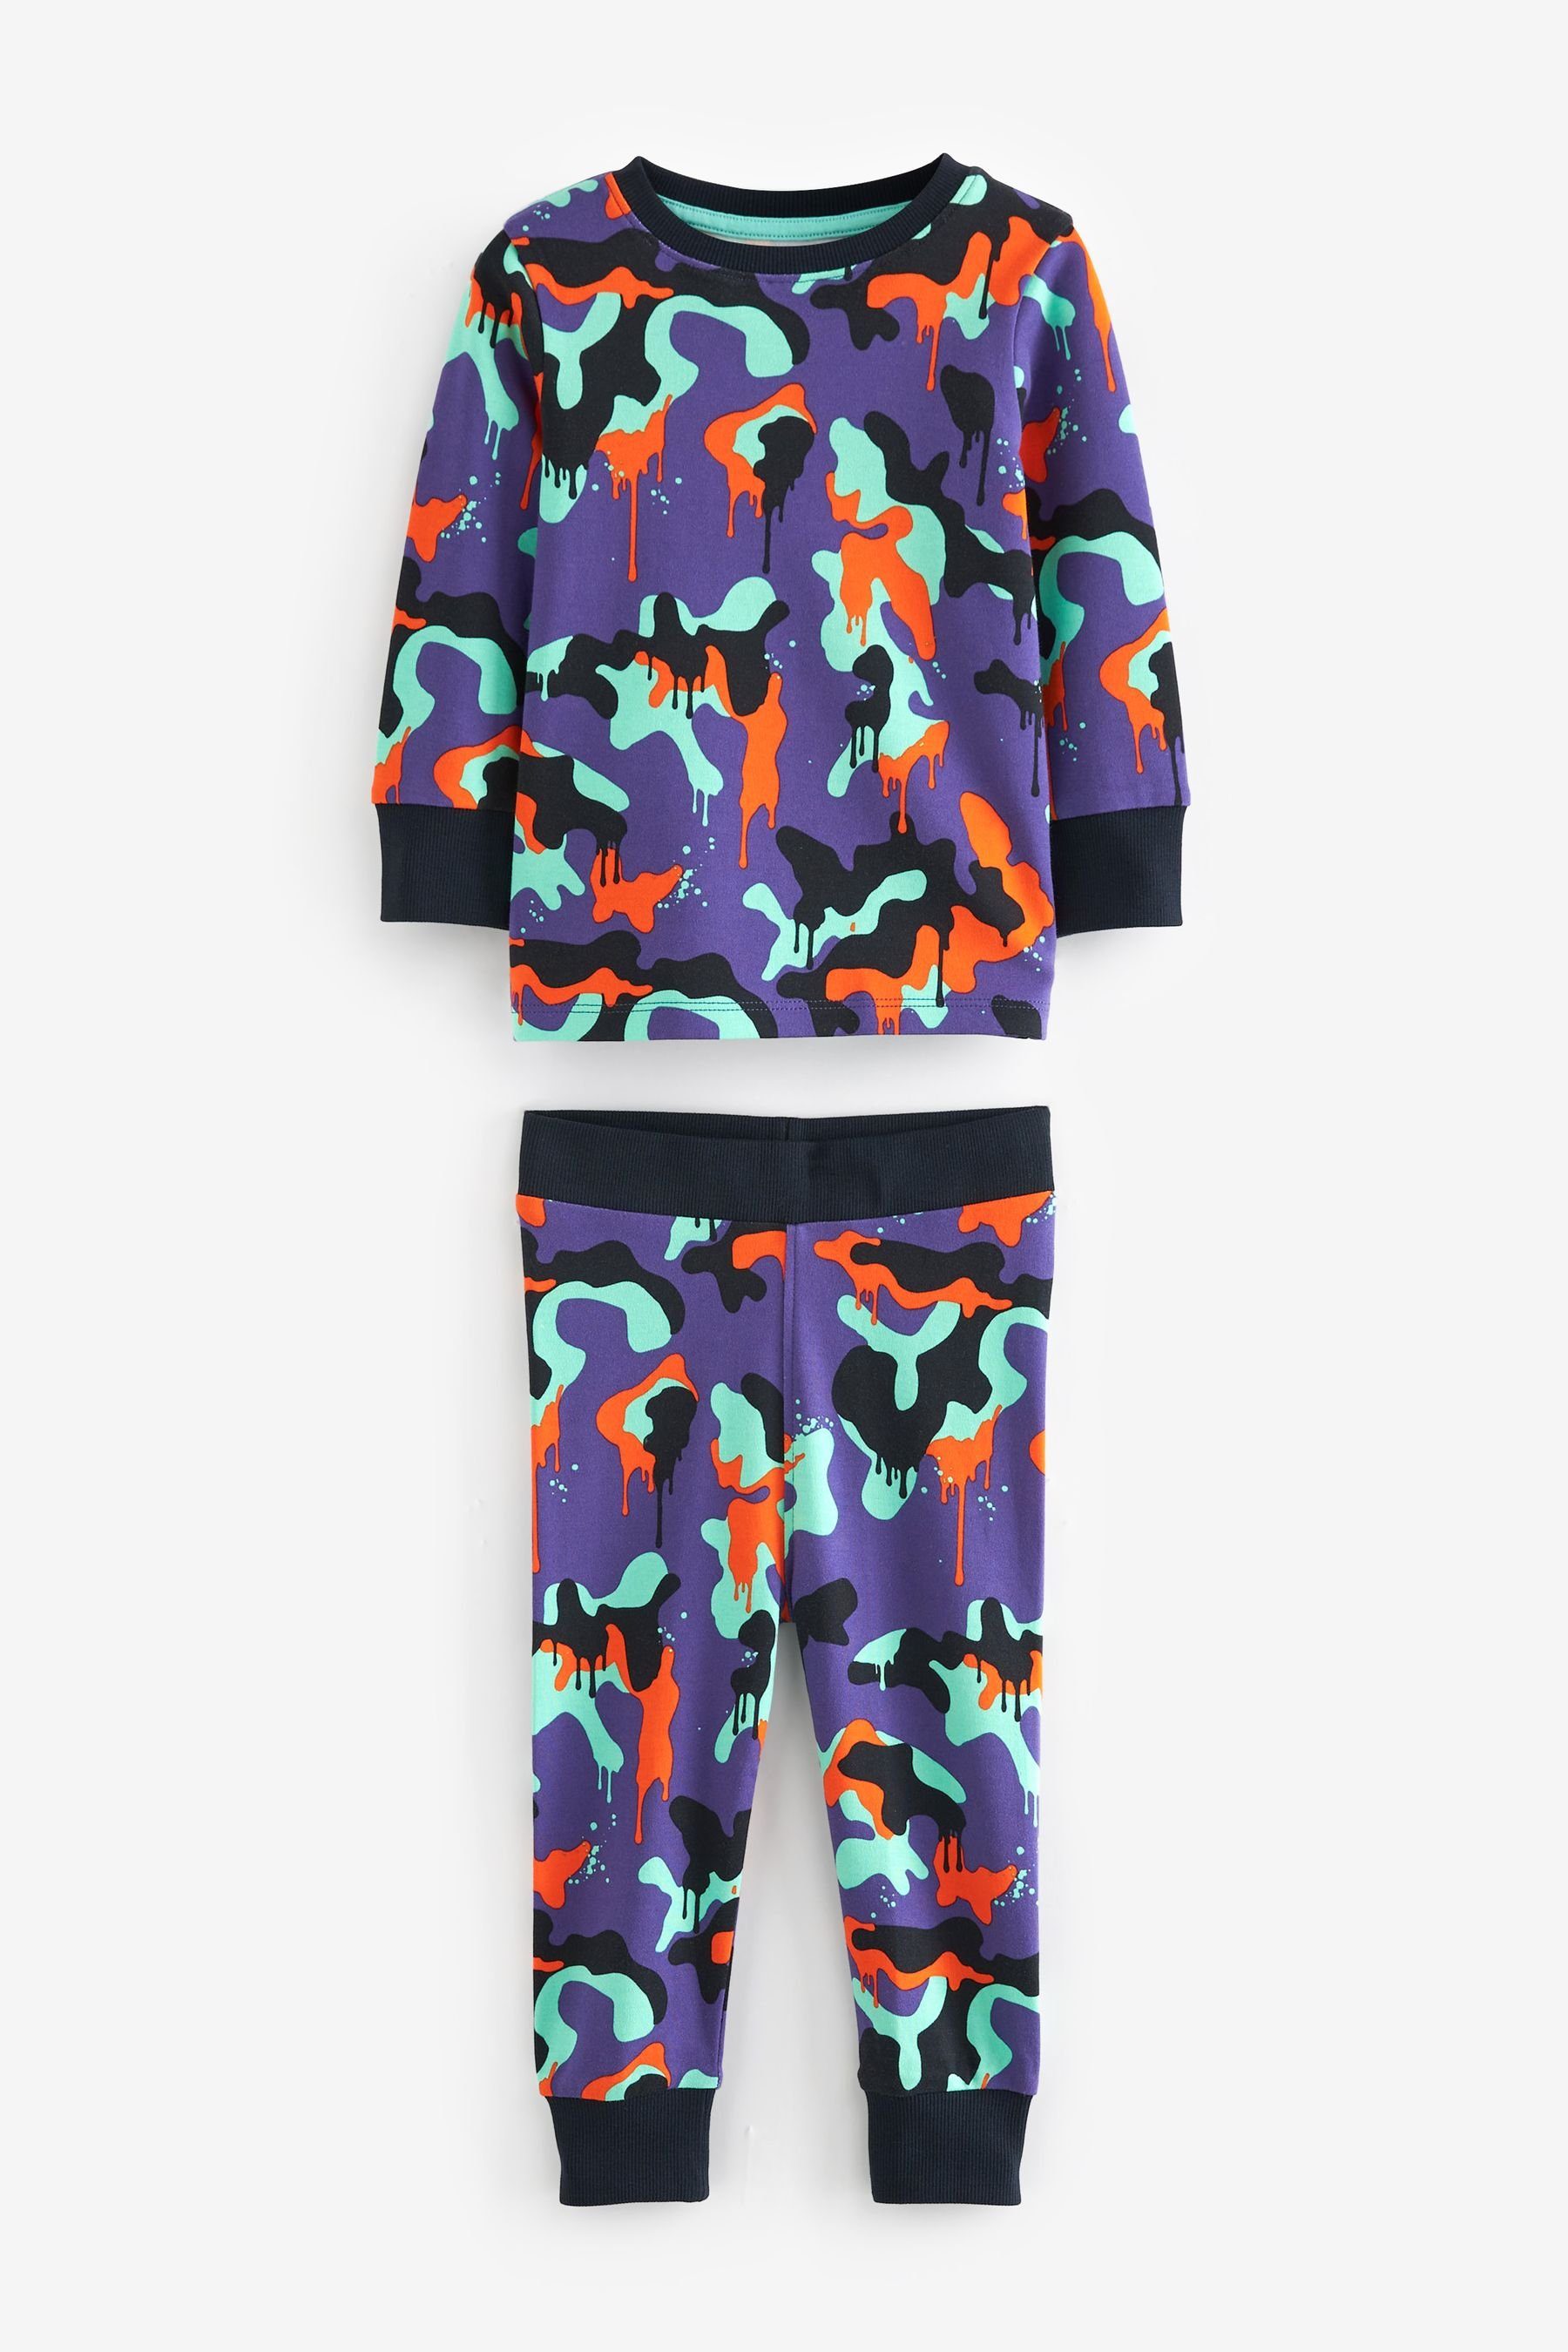 Next Pyjama 3er-Pack Snuggle Navy Blue/Purple tlg) Space Schlafanzüge (6 Dinosaur